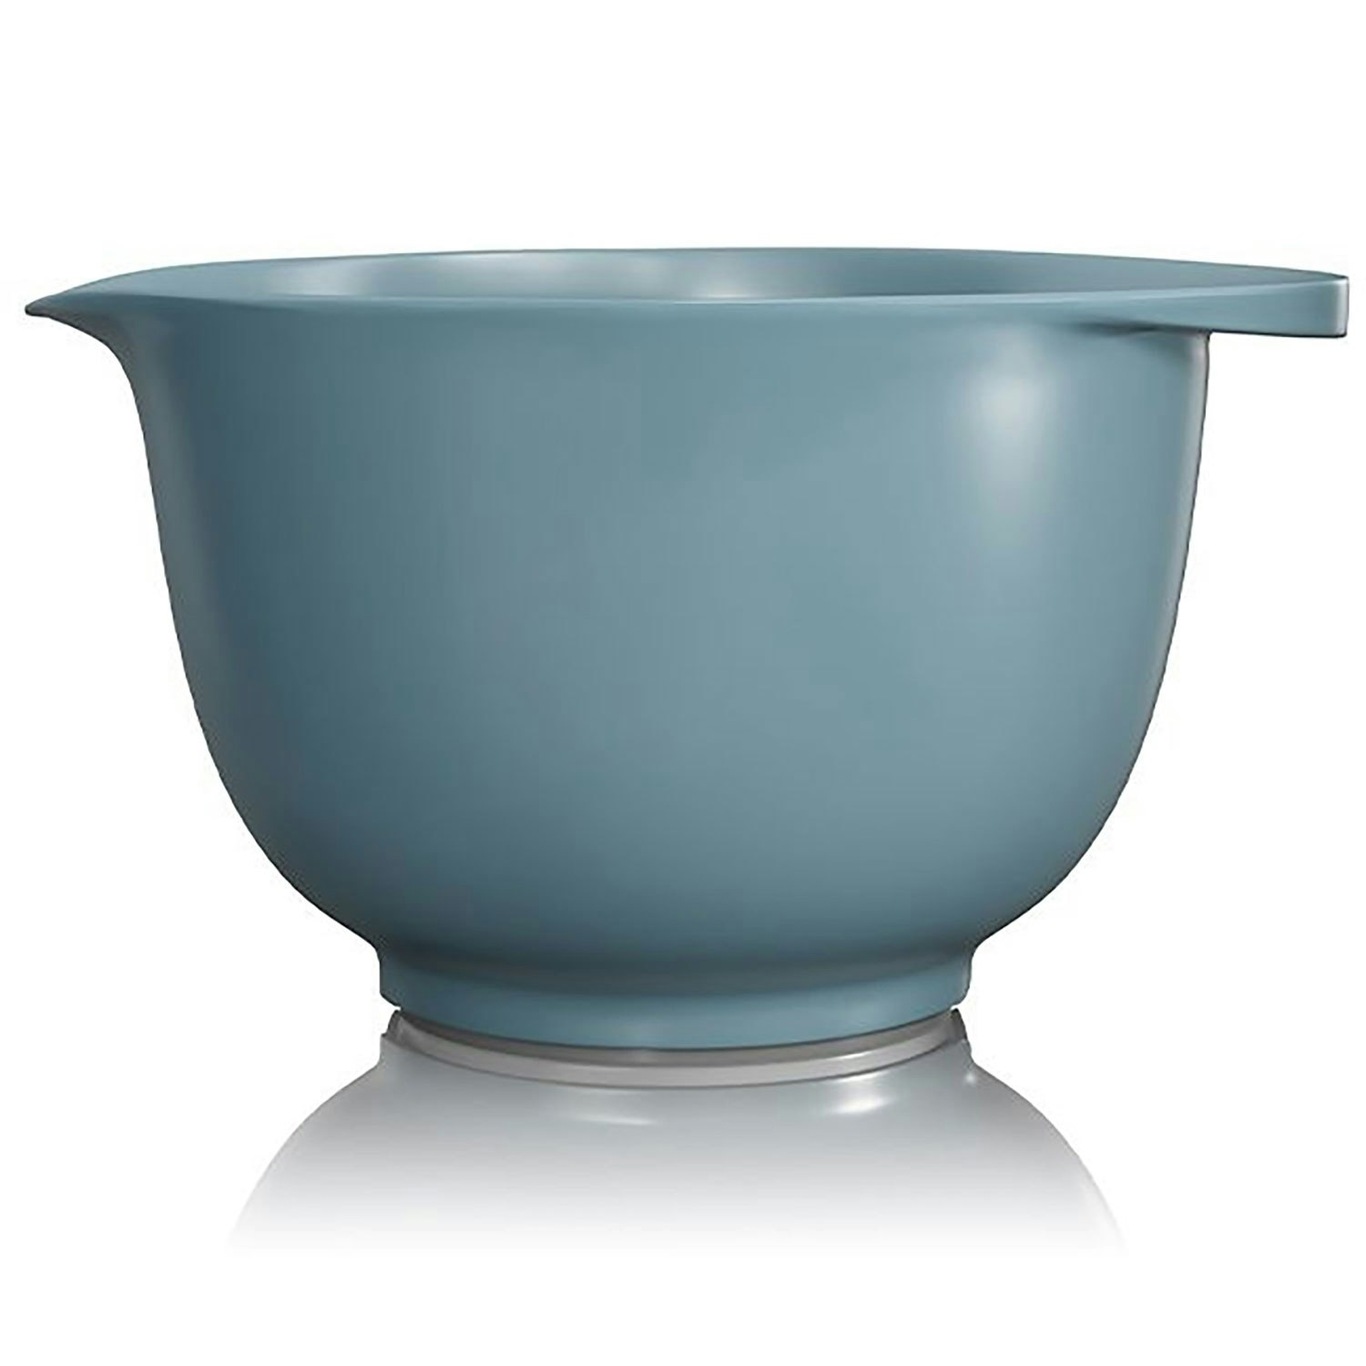 https://royaldesign.com/image/2/rosti-bowl-victoria-2-liters-dusty-blue-1?w=800&quality=80